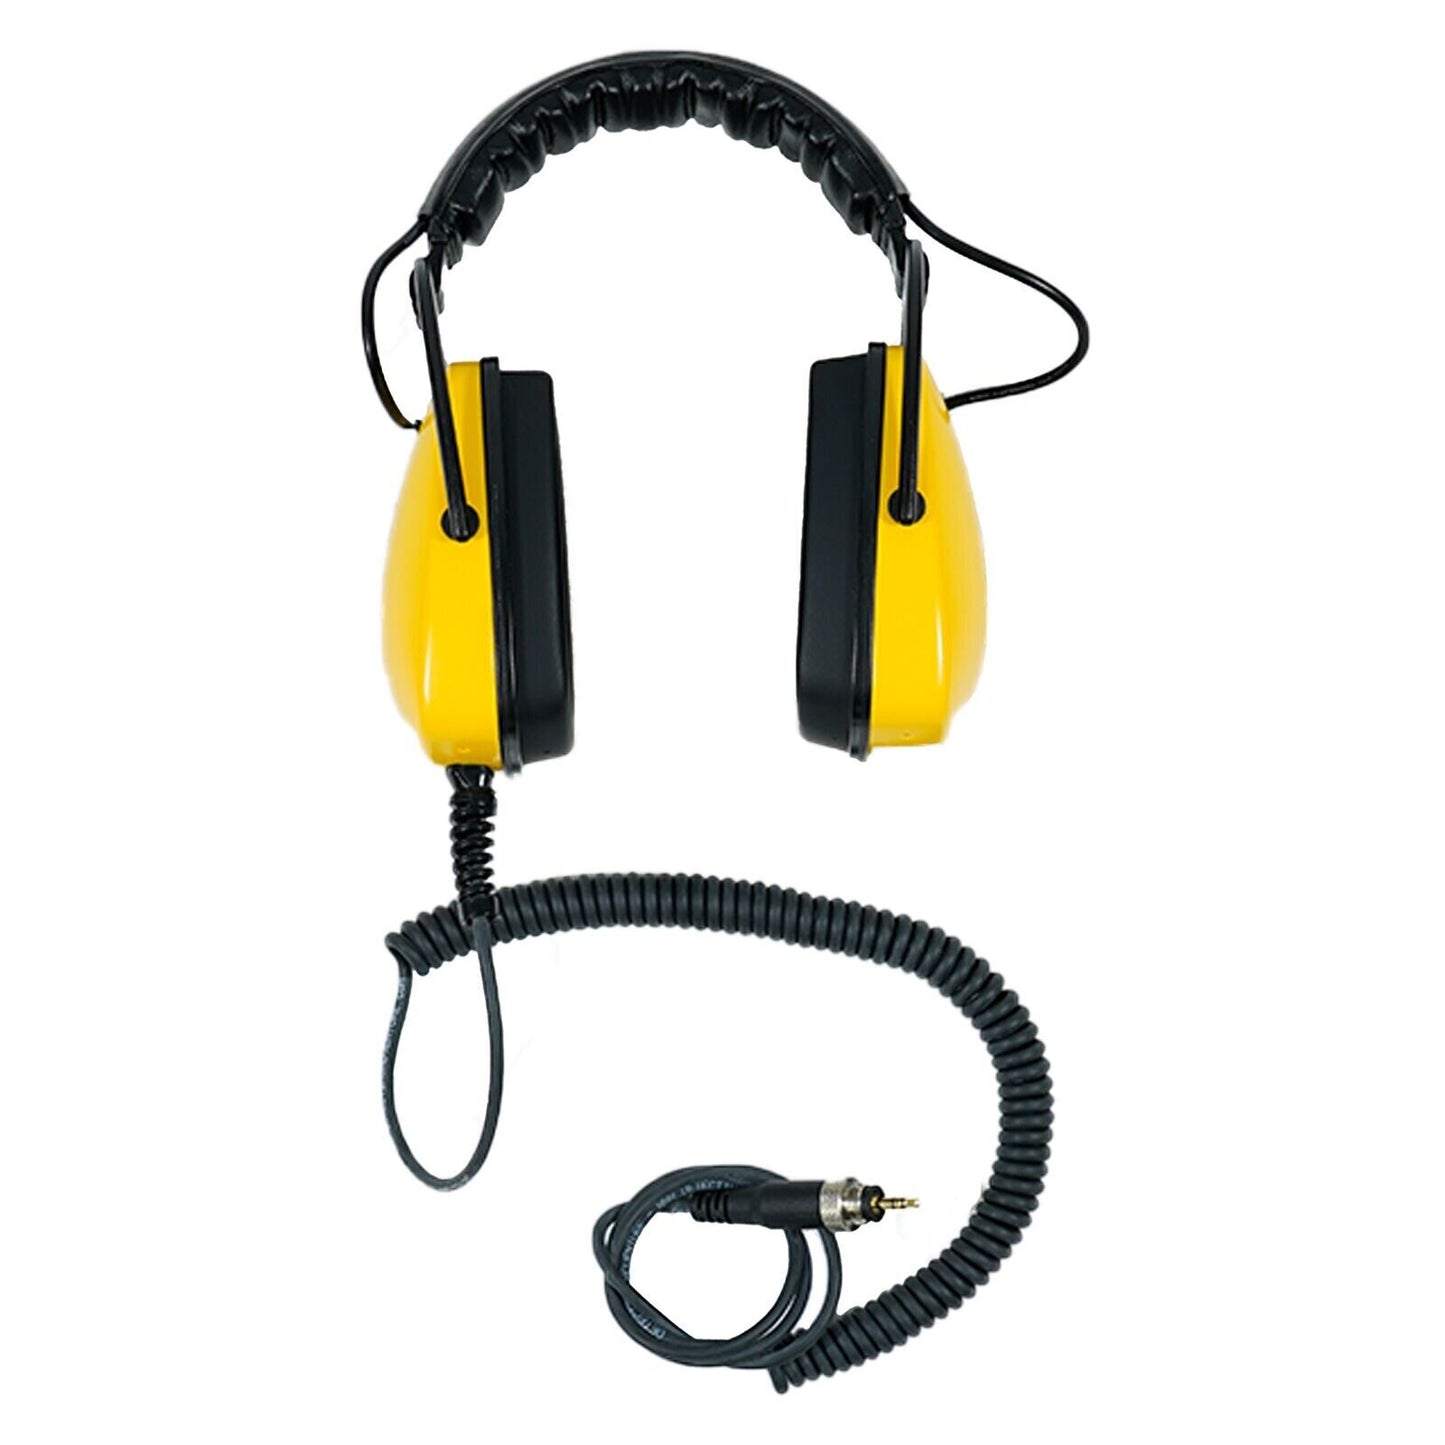 Thresher Headphones Submersible Minelab Equinox Series